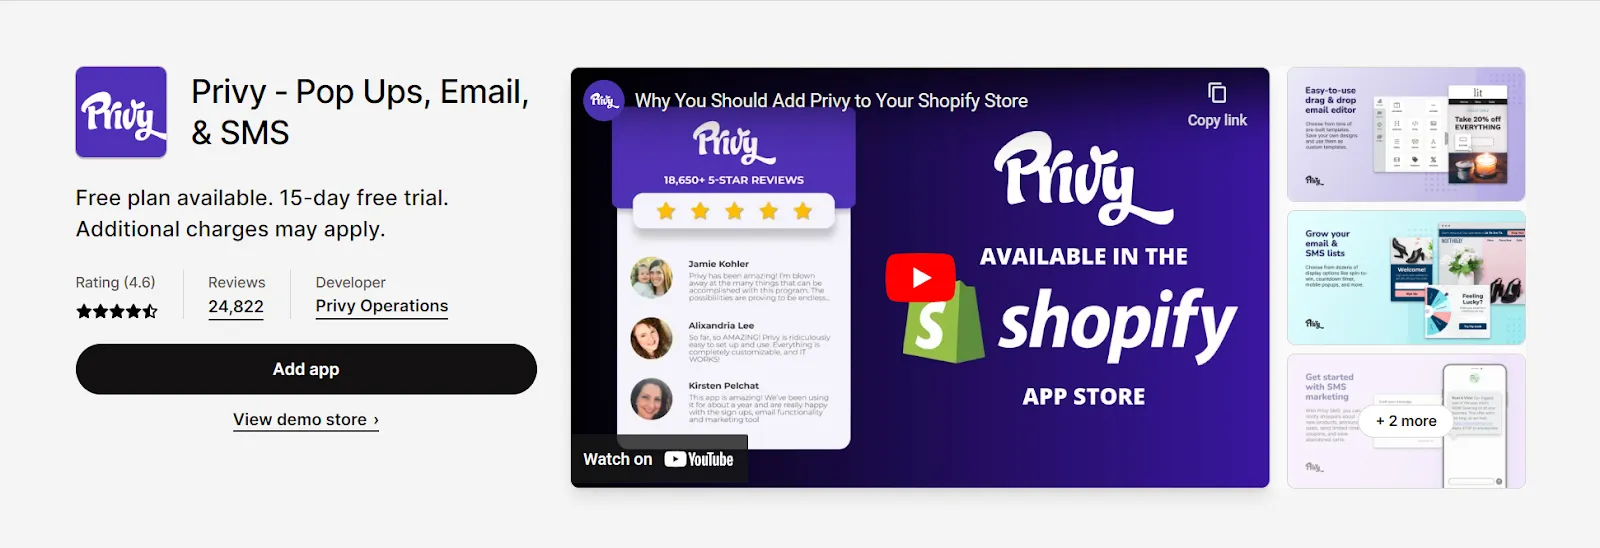 Privy Shopify app